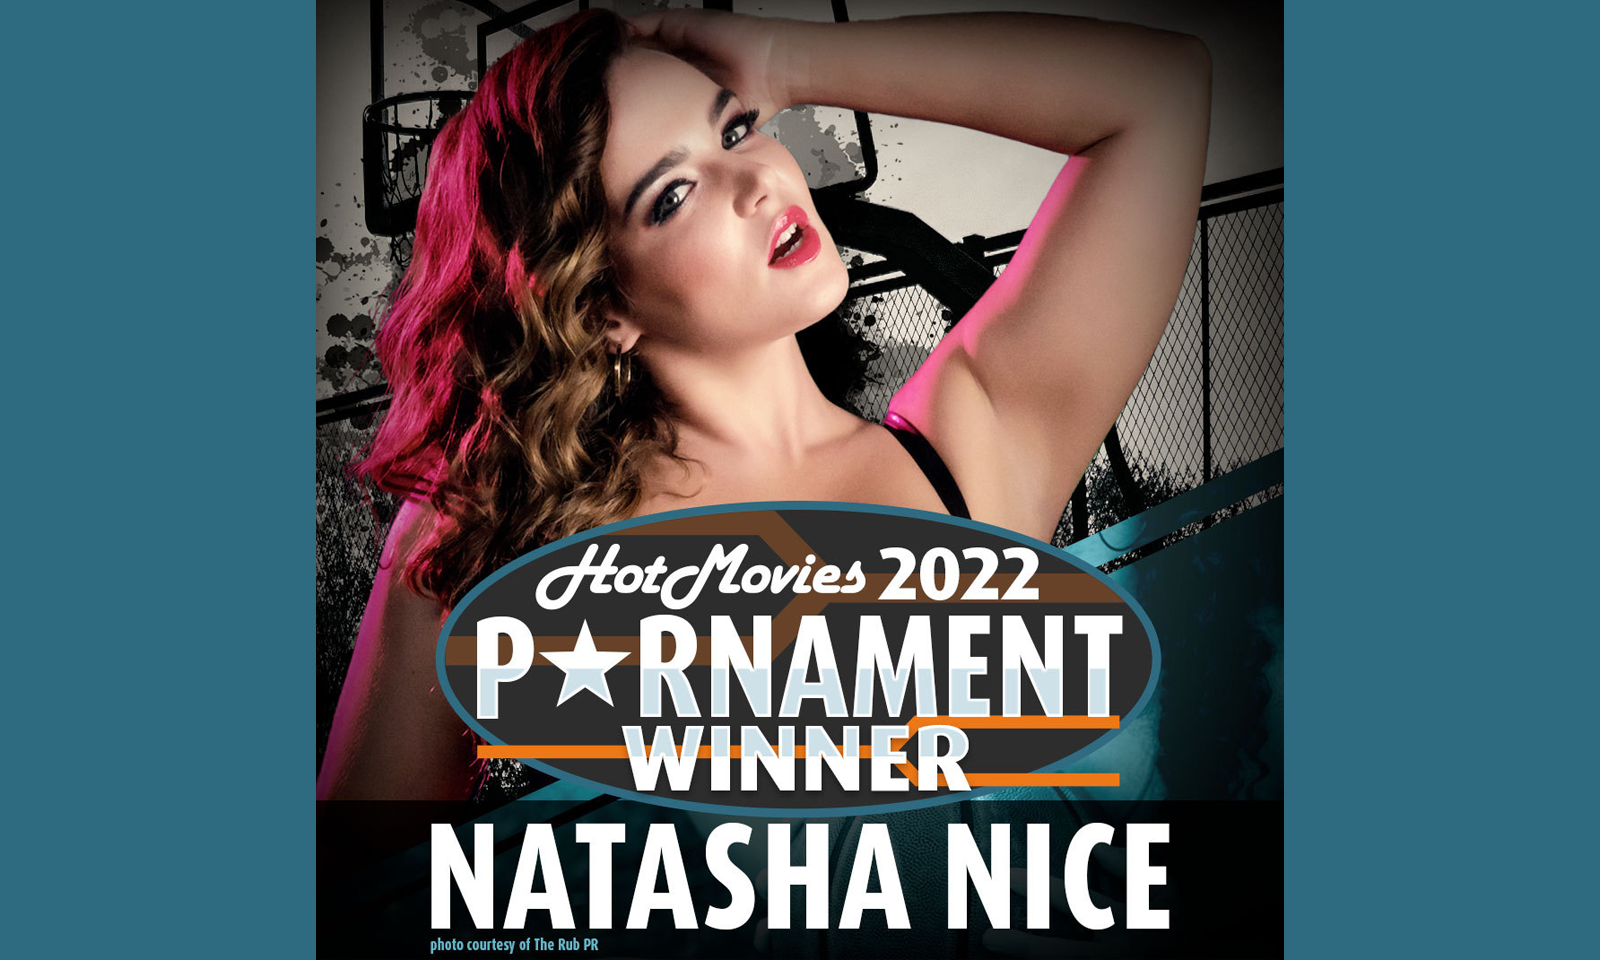 Natasha Nice Wins 2022 HotMovies Pornament Crown